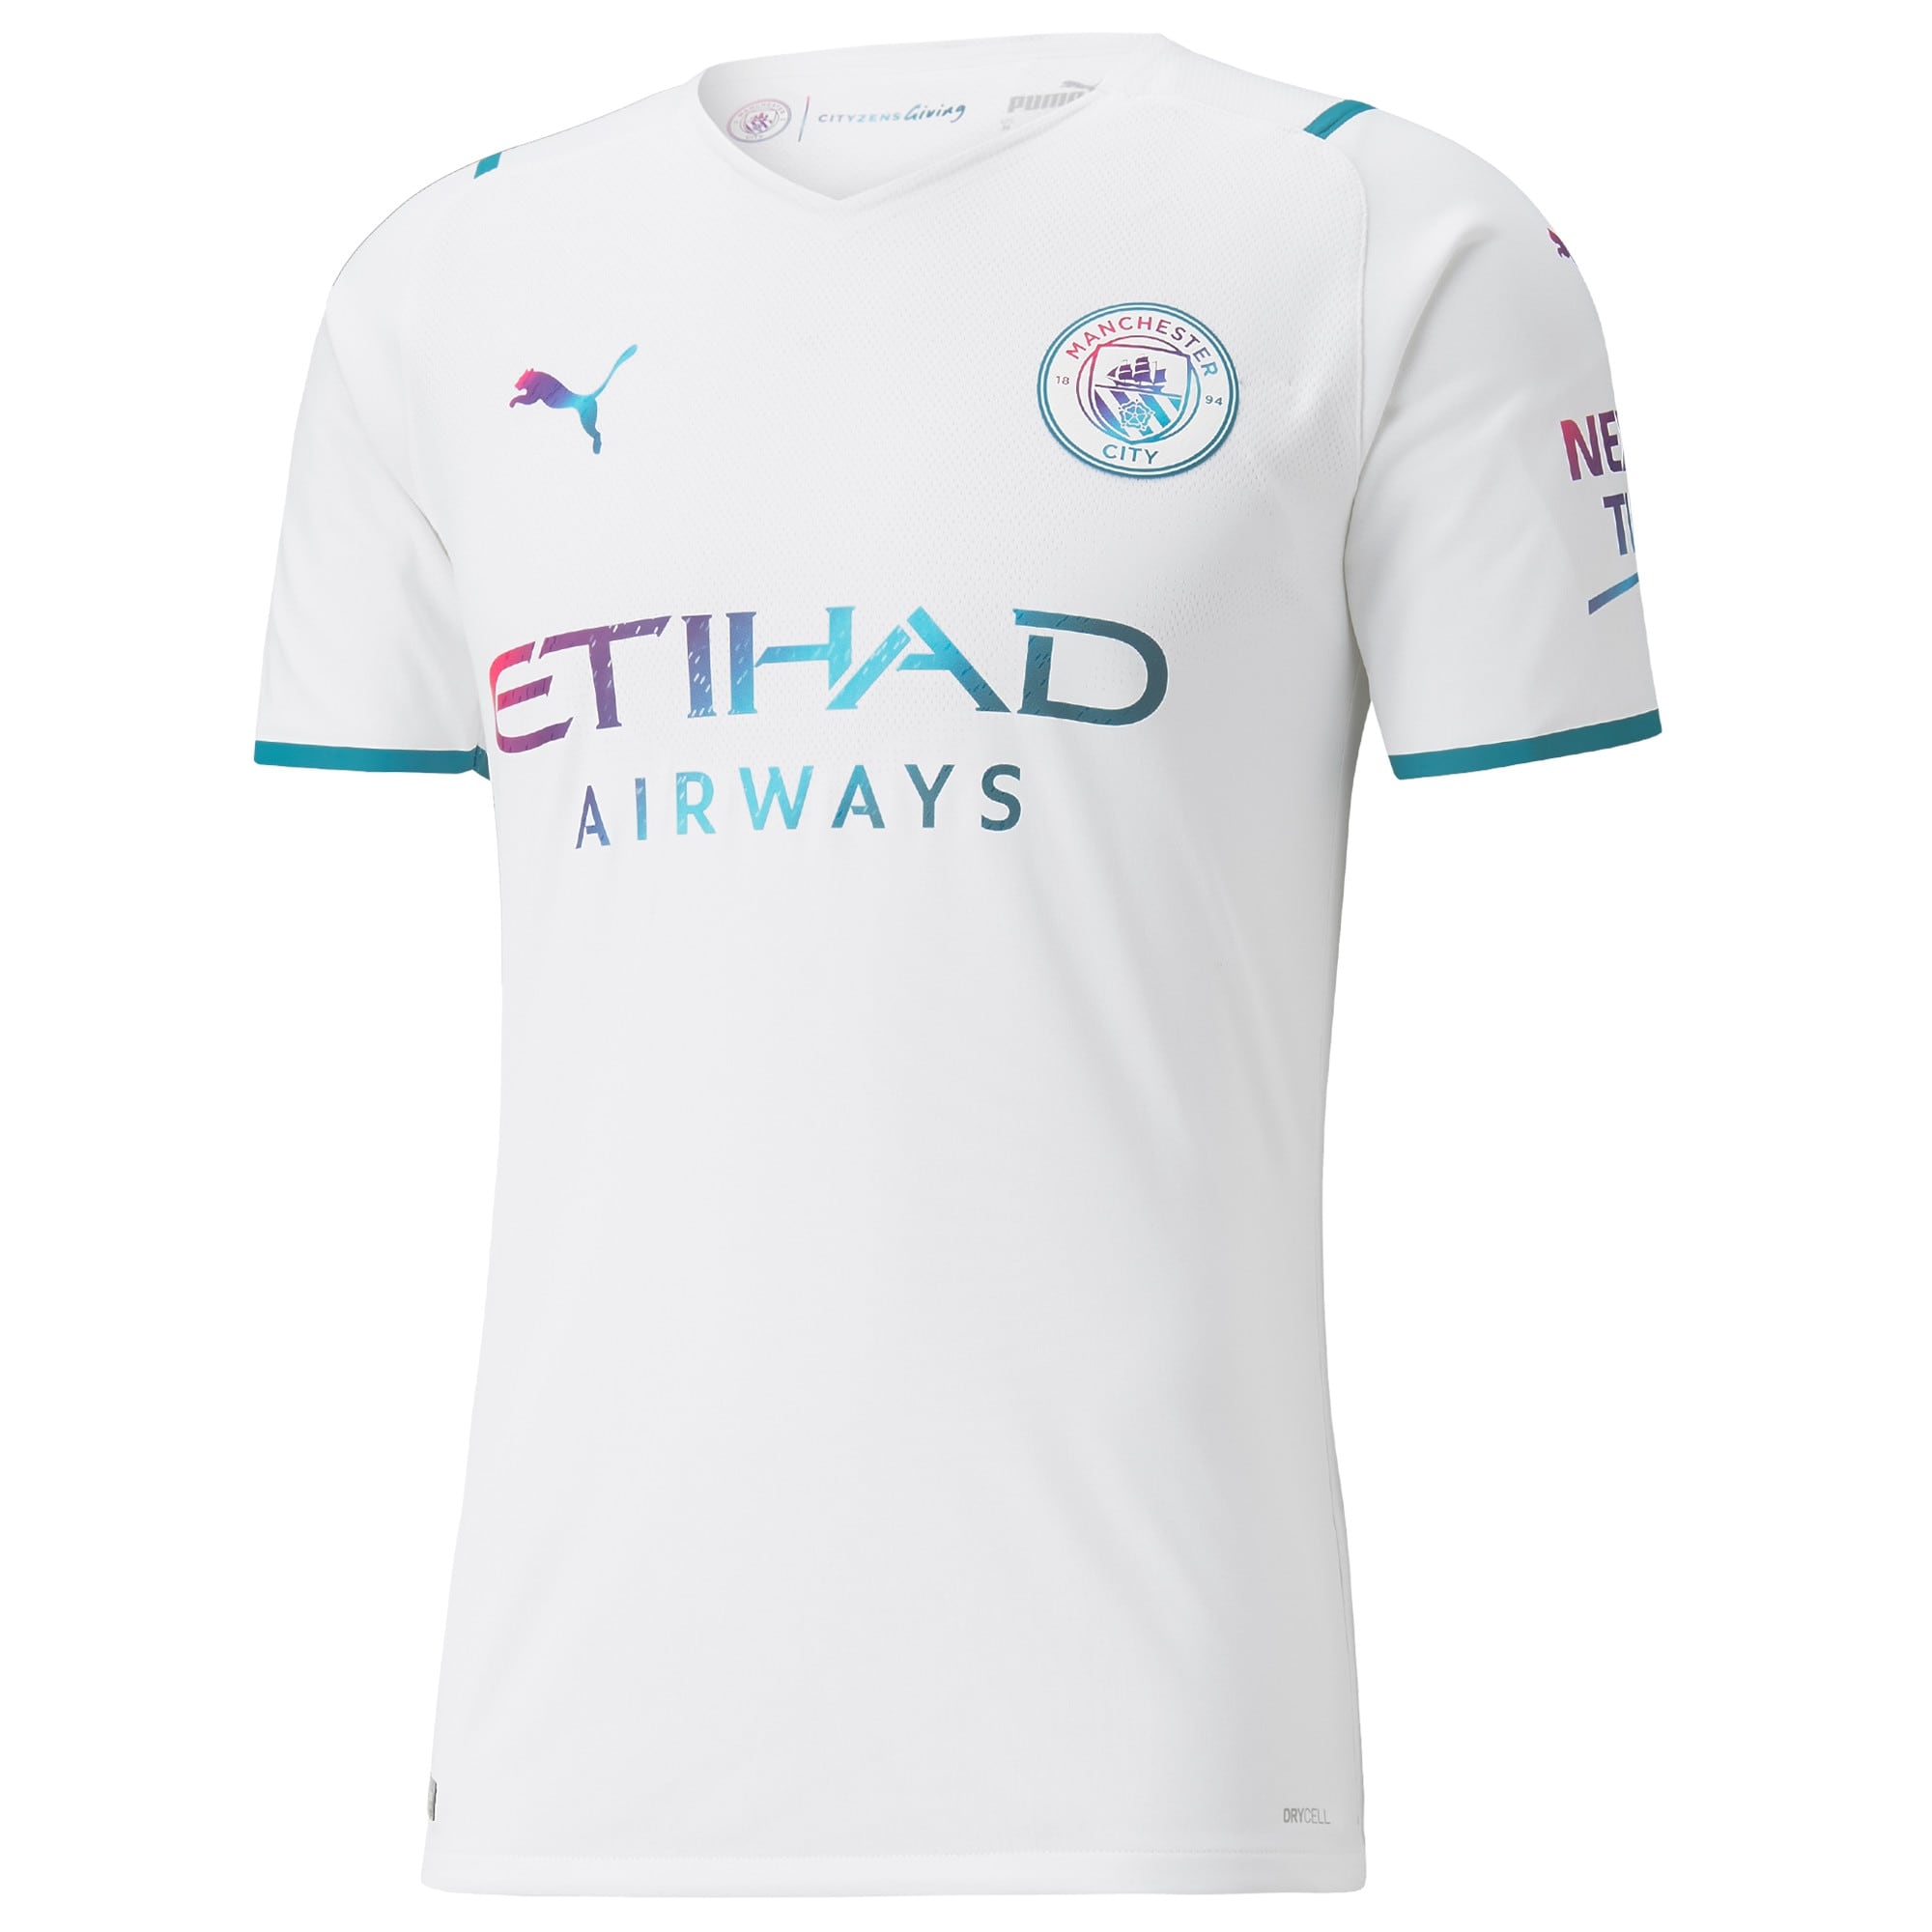 Manchester City Authentic Away Shirt 2021-22 with Bernardo 20 printing